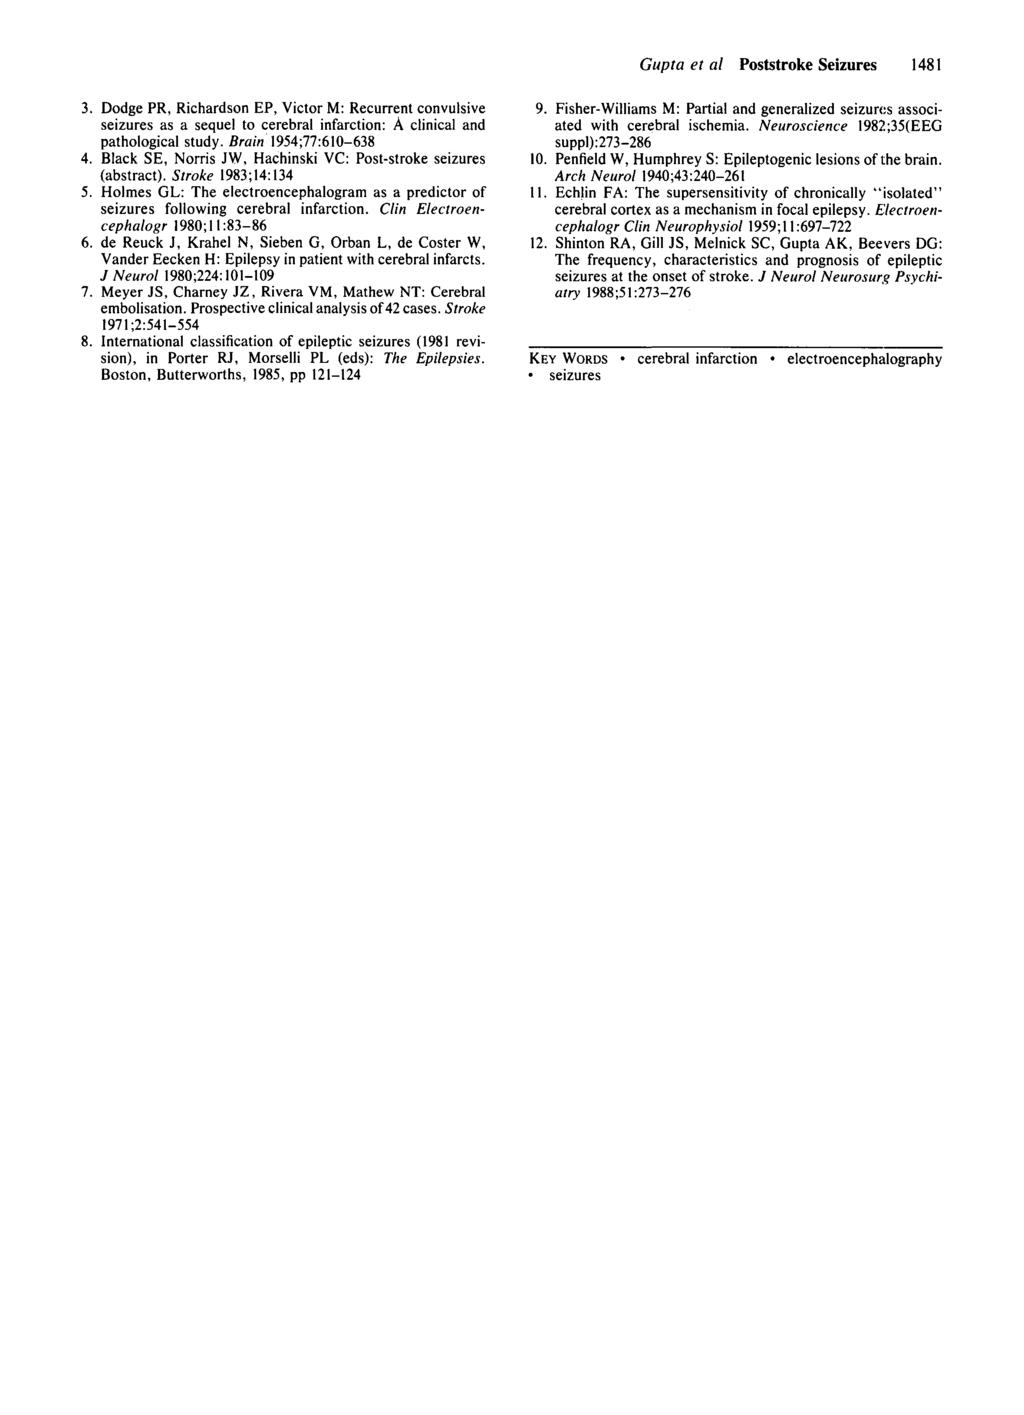 Gupta et al Poststroke Seizures 48. Dodge PR, Richardson EP, Victor M: Recurrent convulsive as a sequel to cerebral infarction: A clinical and pathological study, flram 94/:6-68 4.